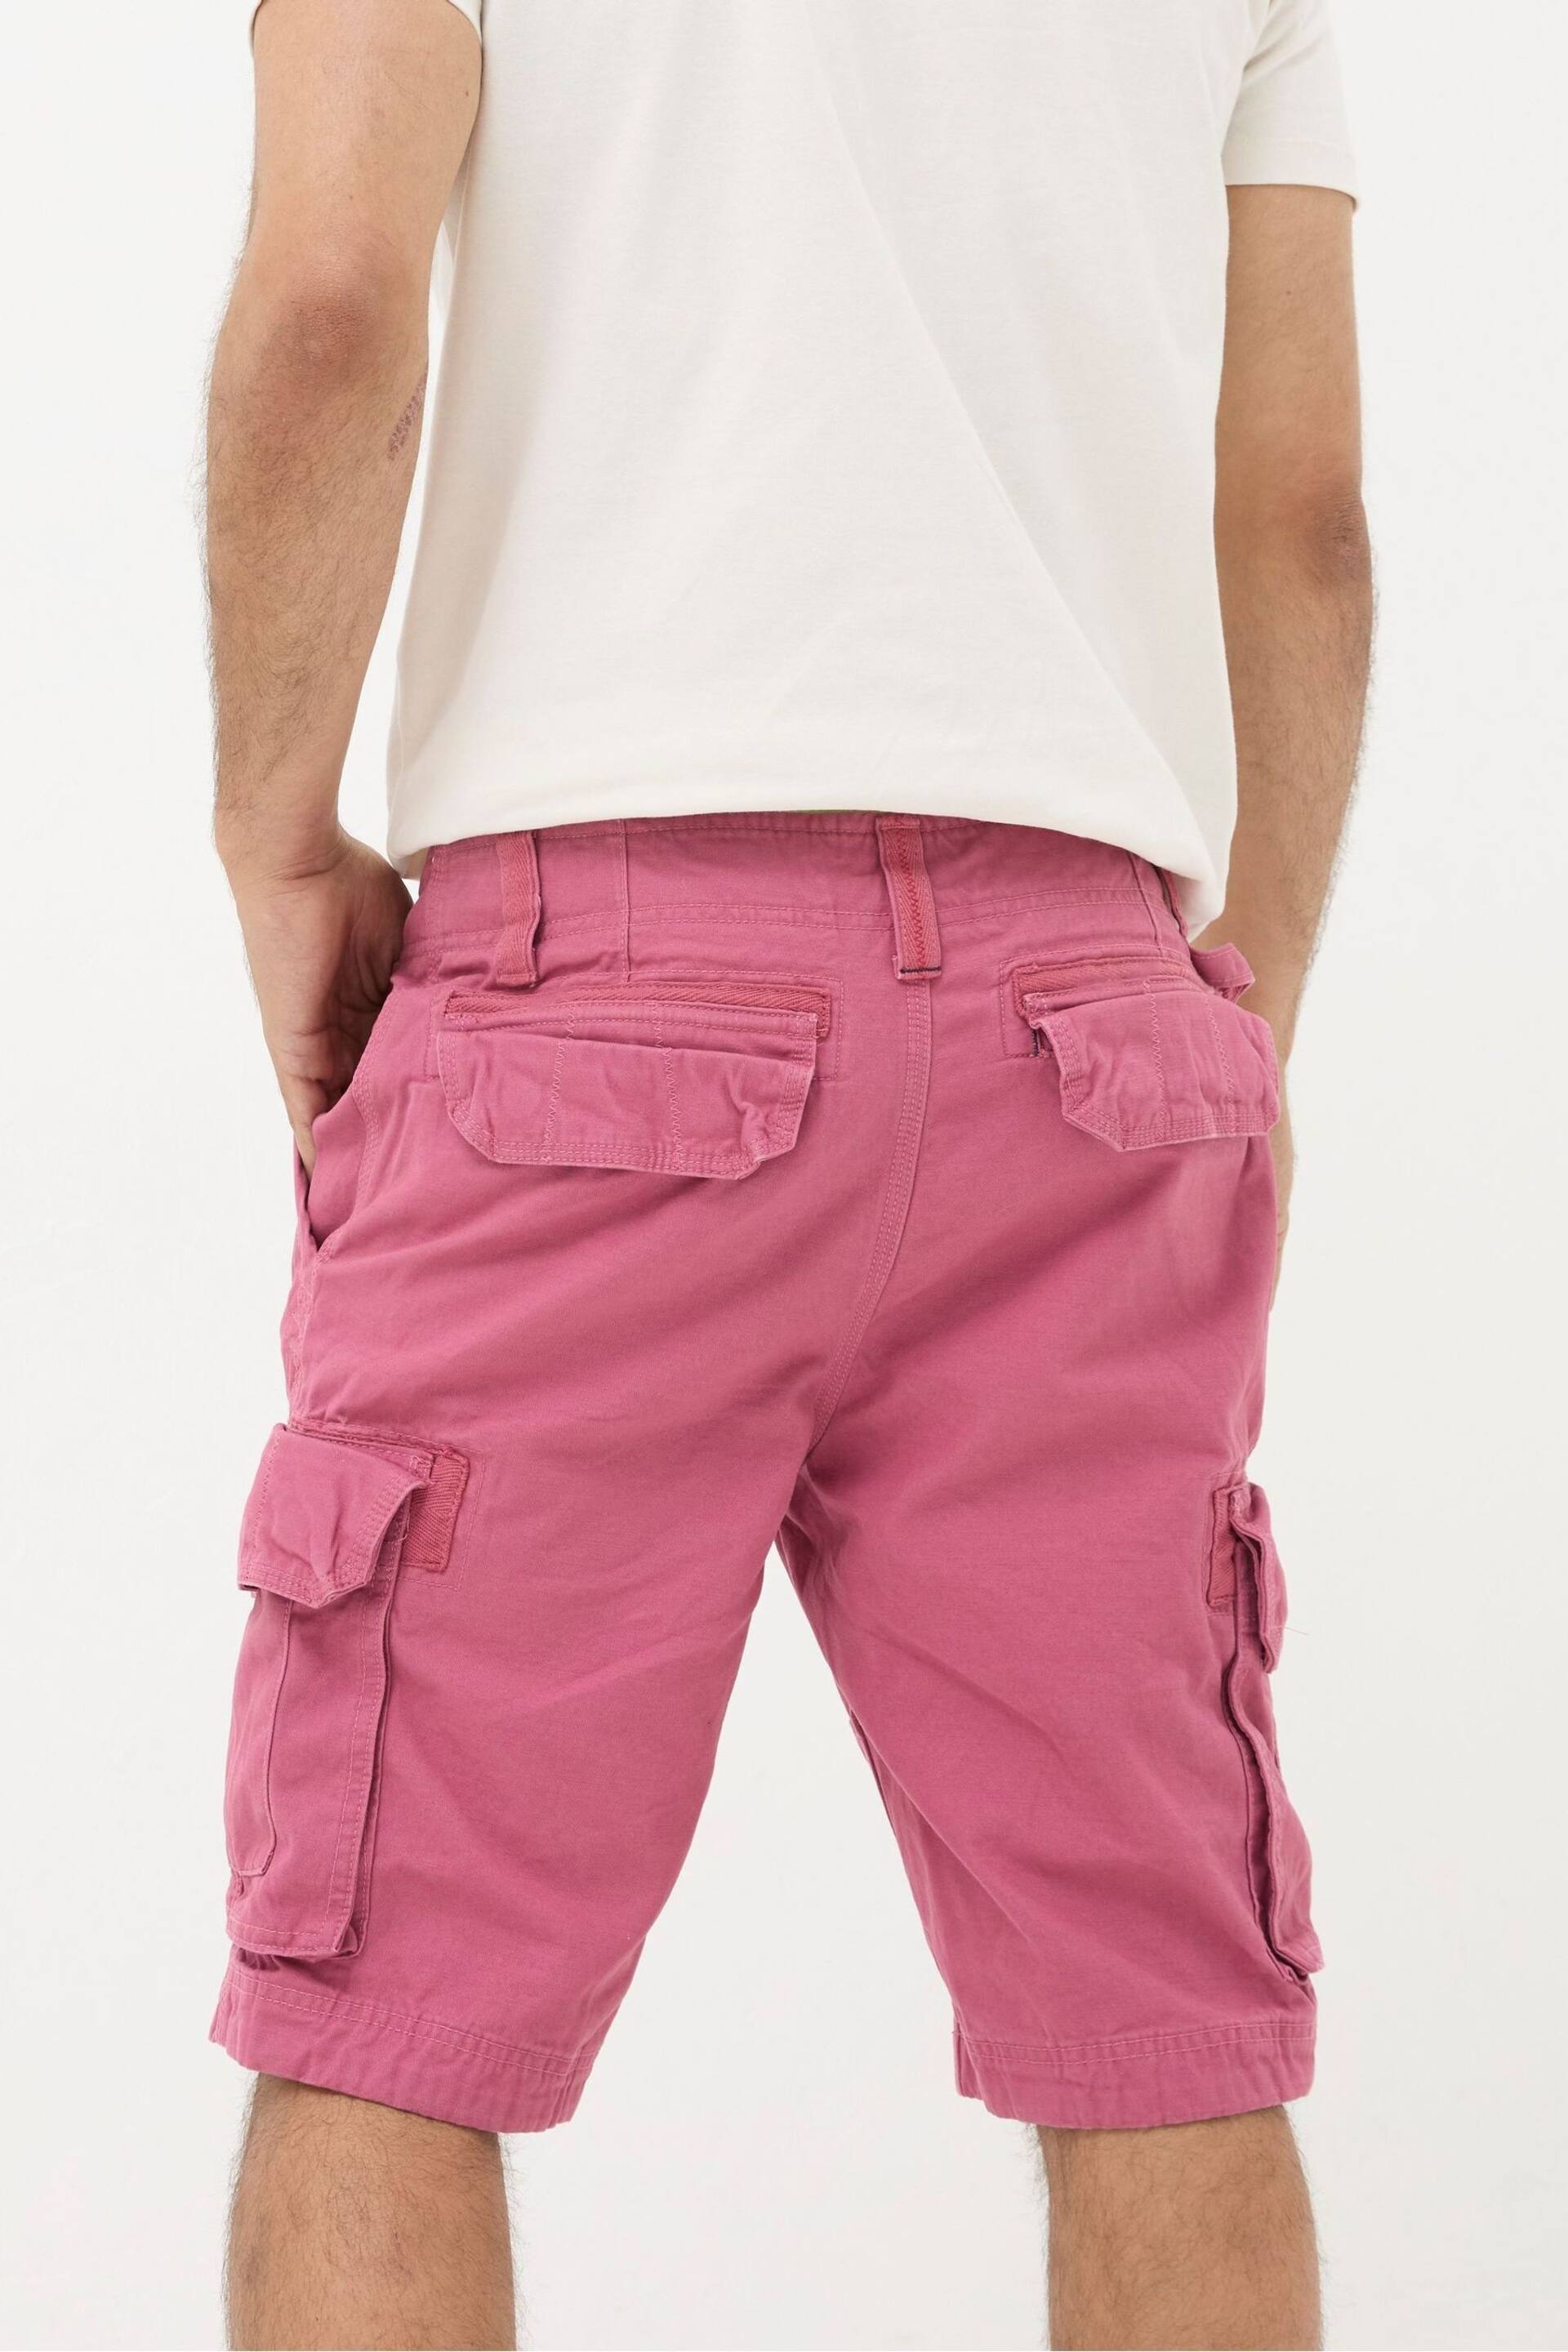 FatFace Pink Breakyard Cargo Shorts - Image 2 of 5